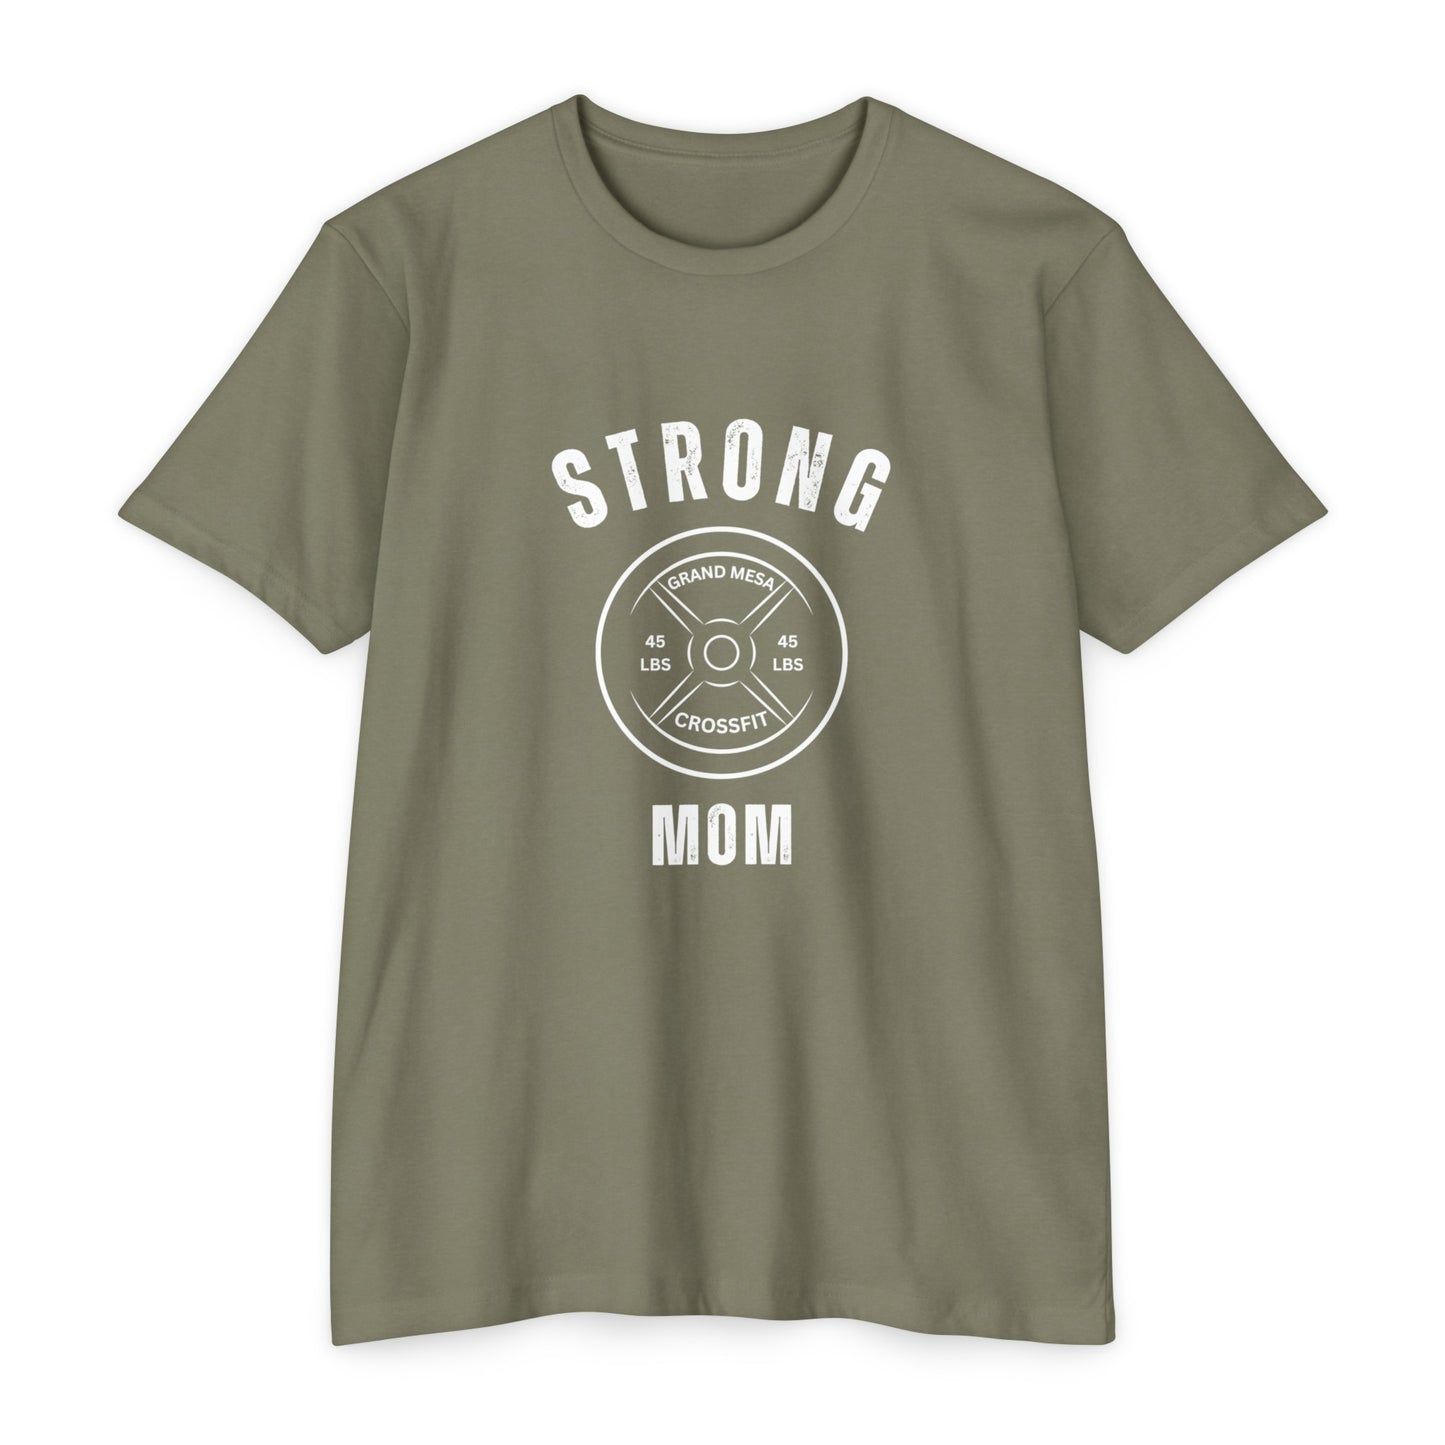 Strong Mom Tee